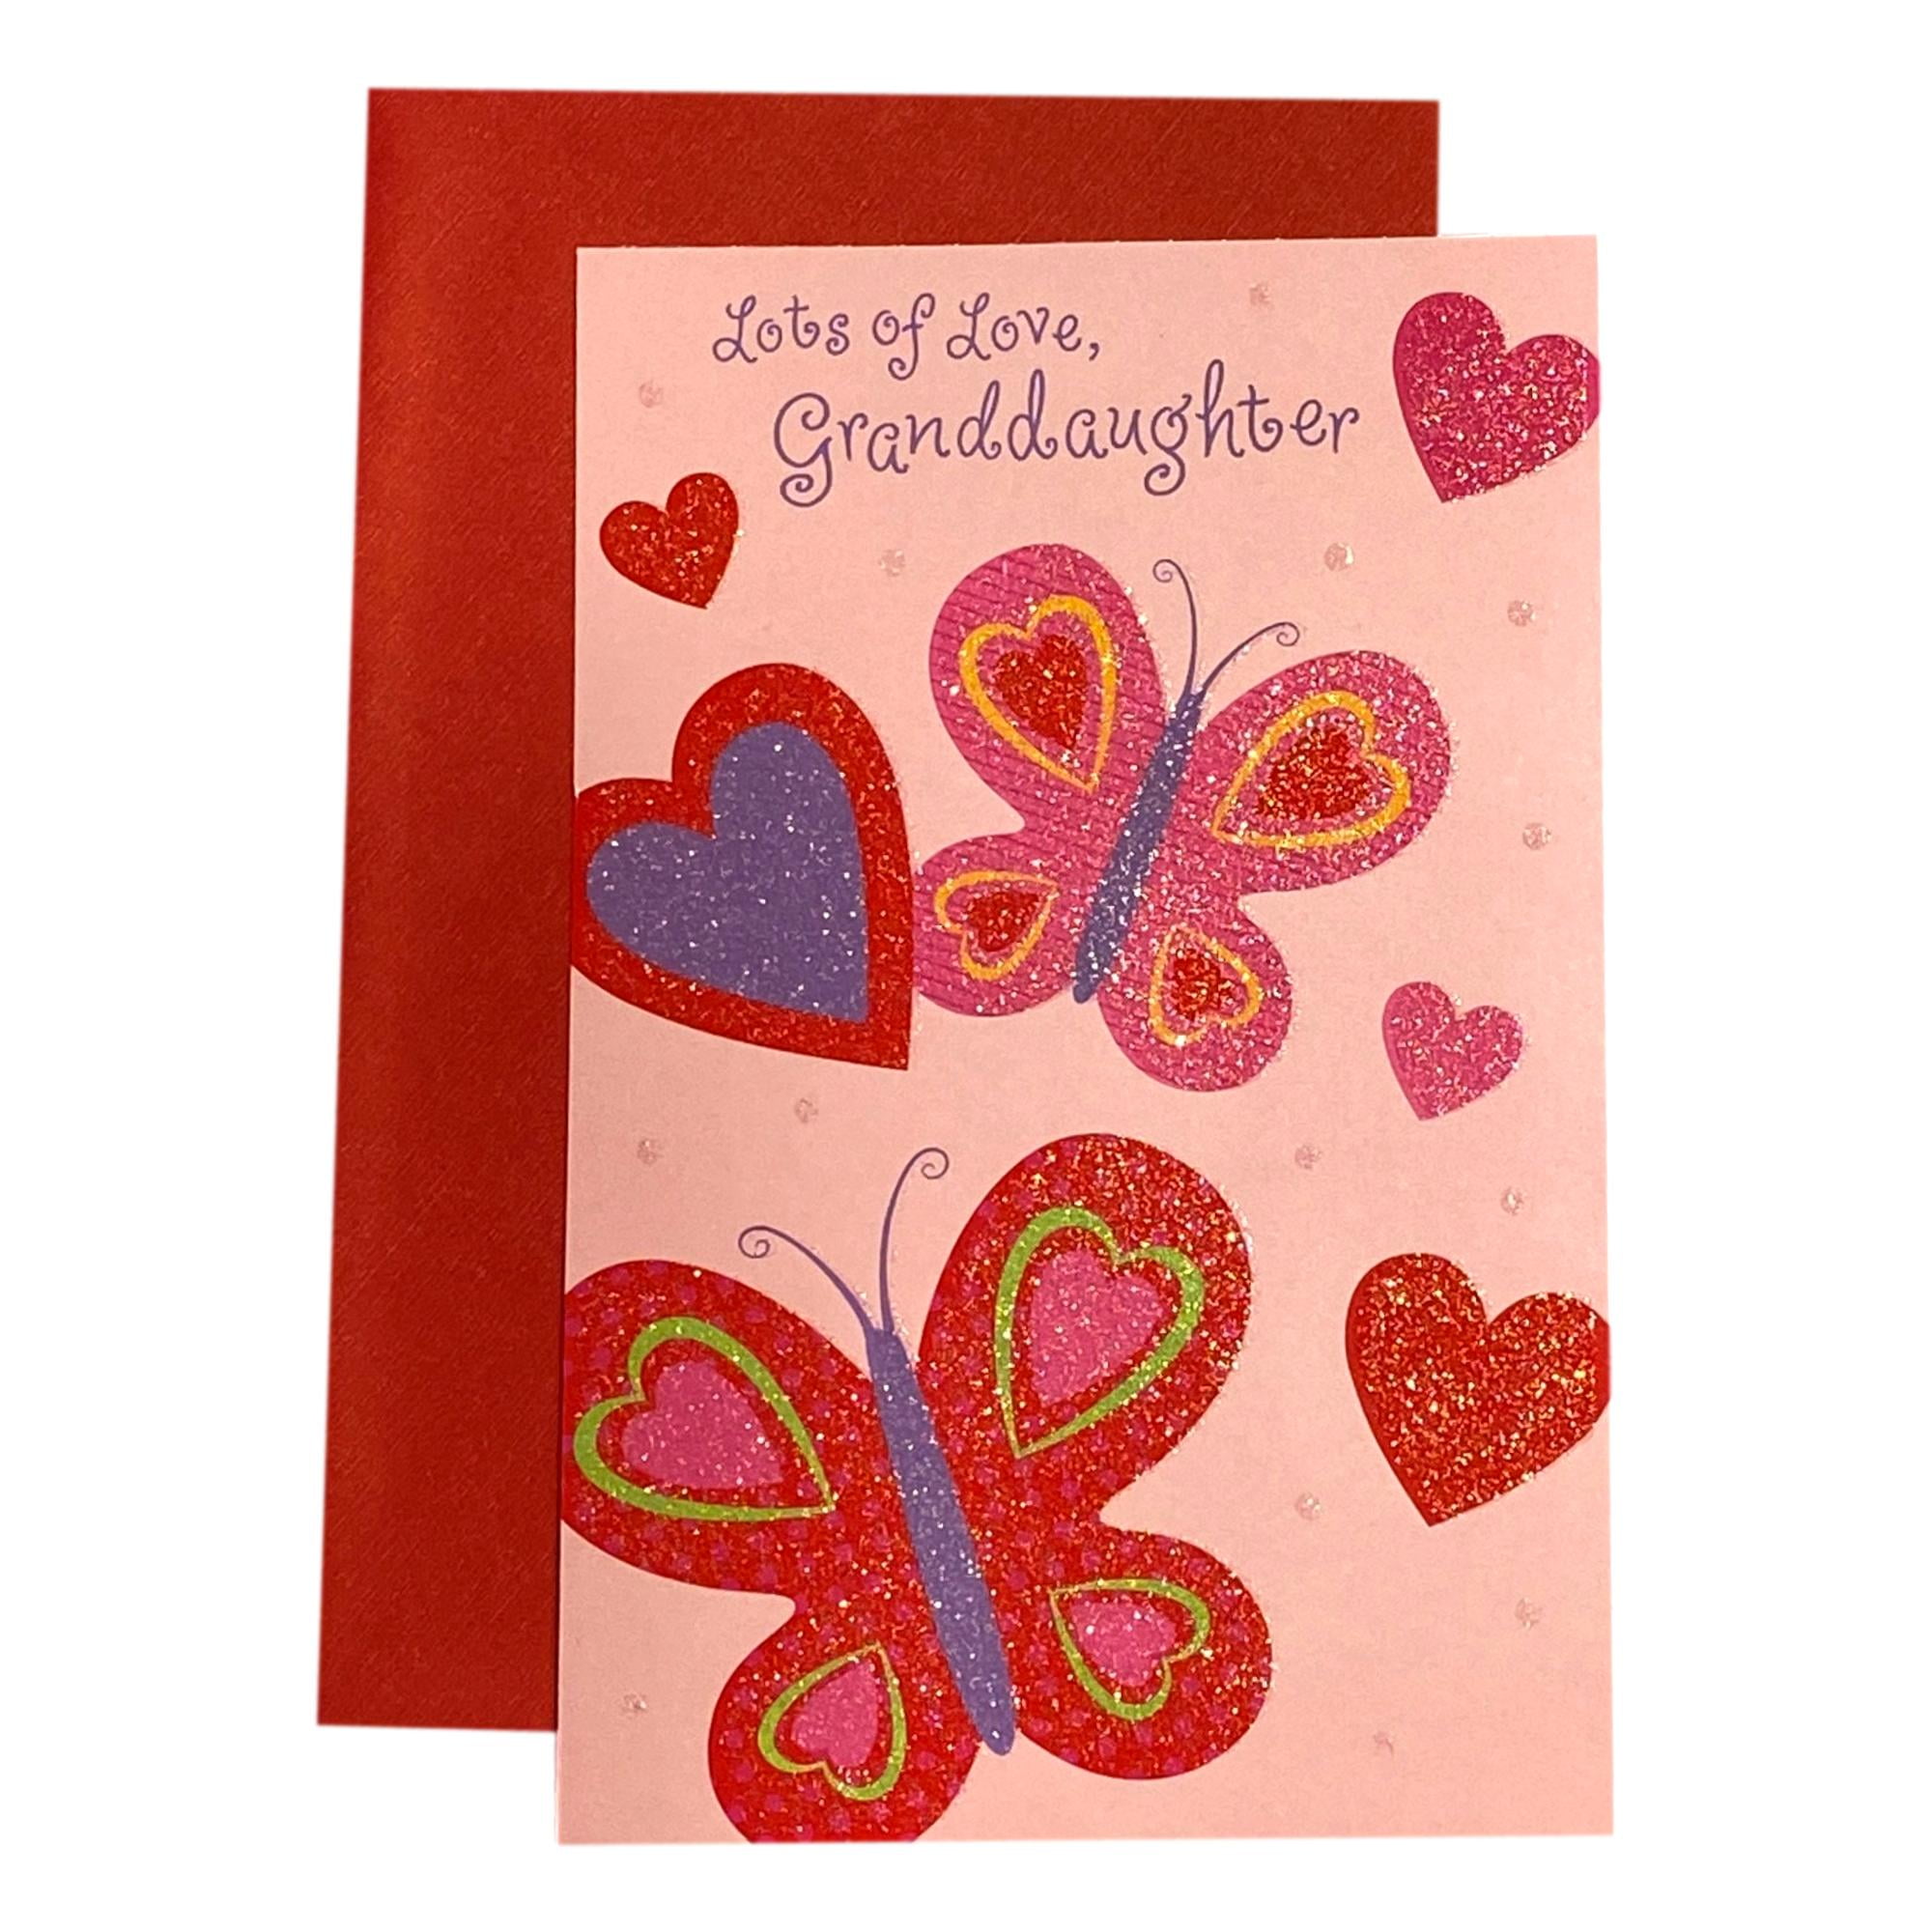 Details about   Hallmark Valentine's Day Card with envelope New Granddaughter  DAYSPRING 